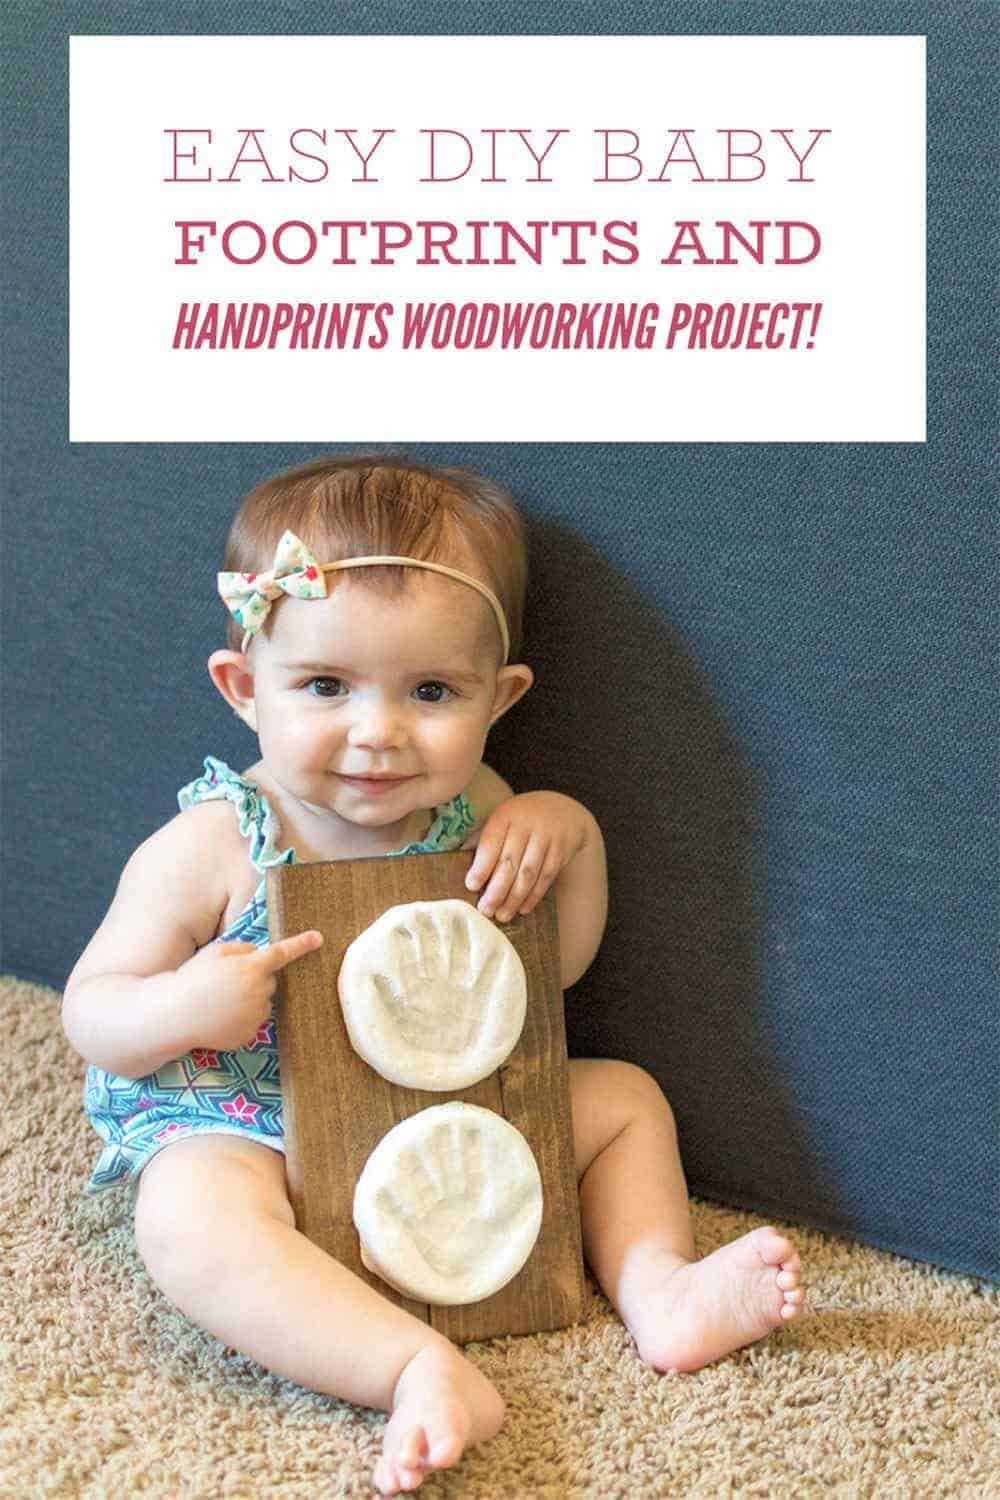 Baby Footprints DIY
 Easy DIY Baby Footprints and Handprints Woodworking Project